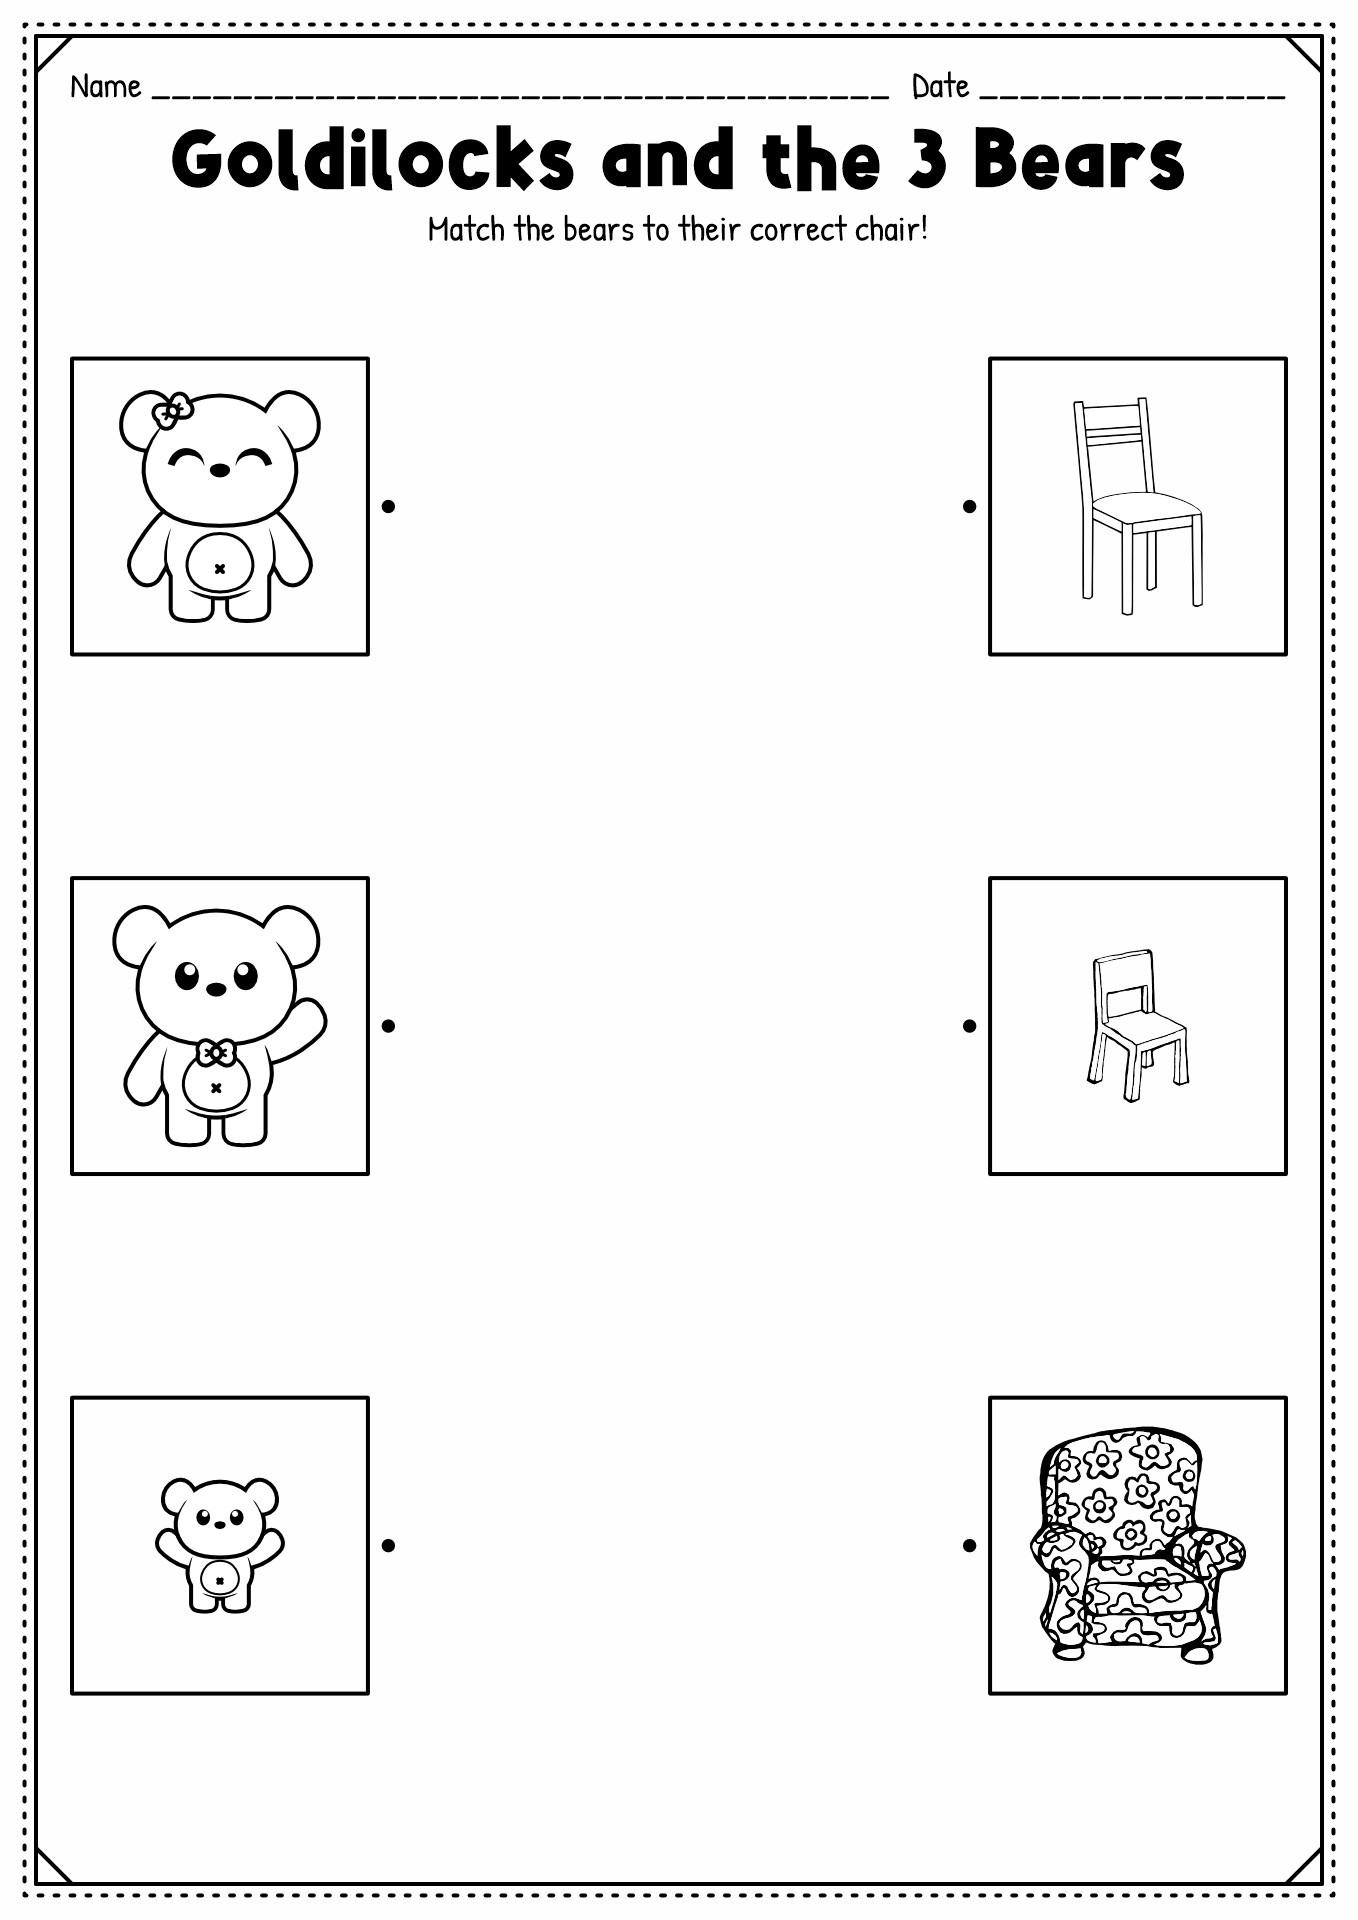 Goldilocks and the Three Bears Worksheets for Preschool